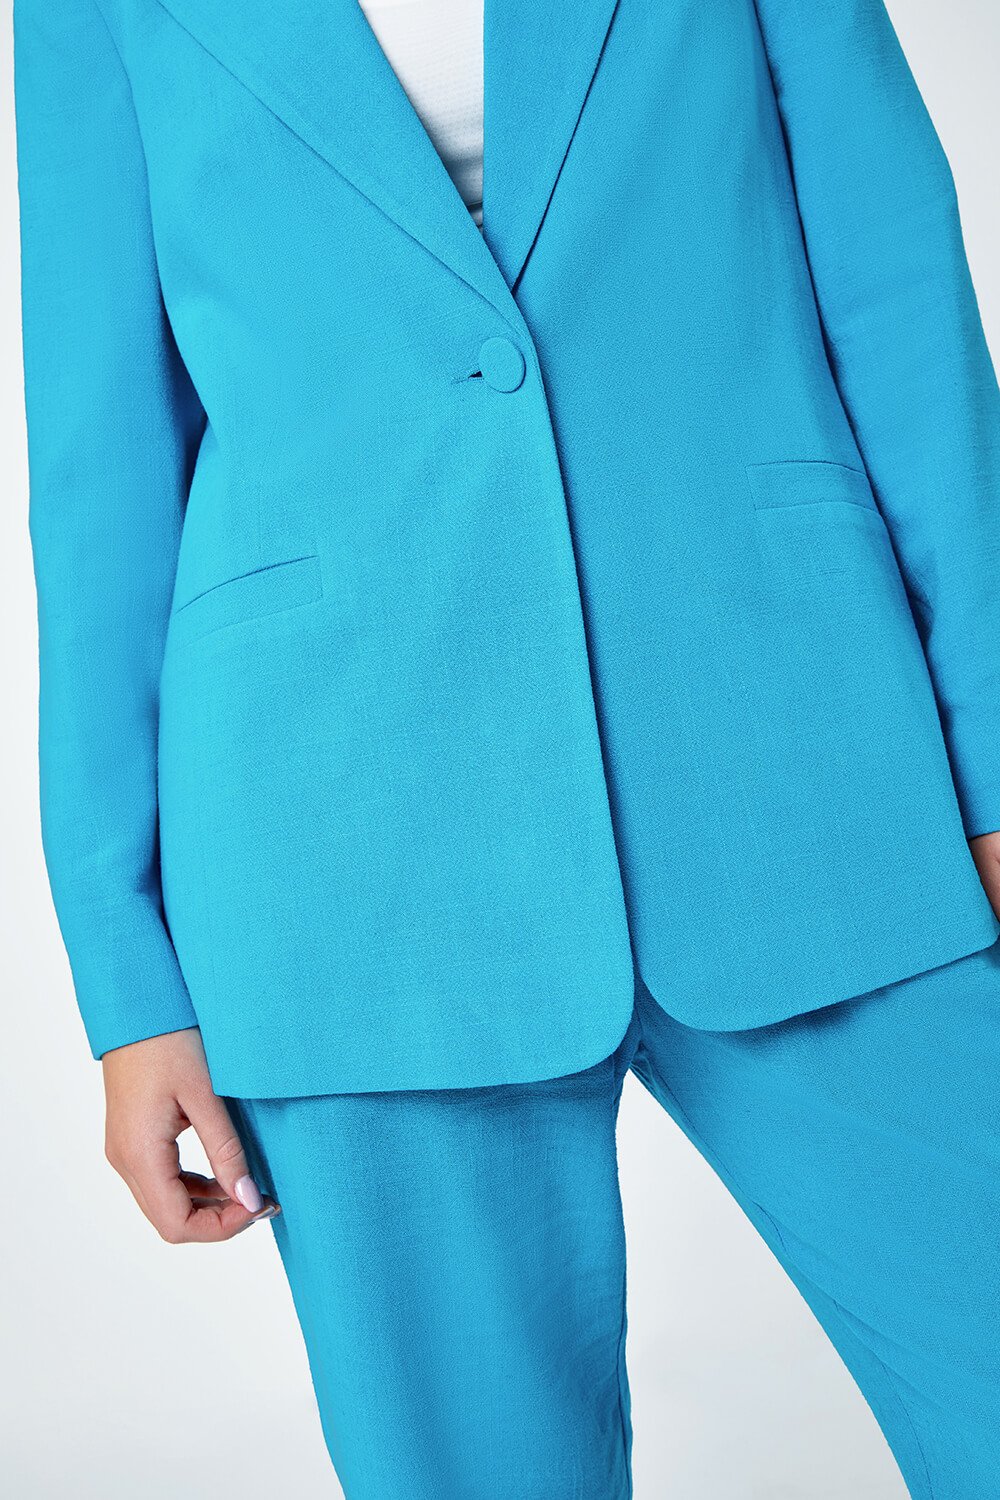 Turquoise Petite Linen Blend Blazer, Image 5 of 7